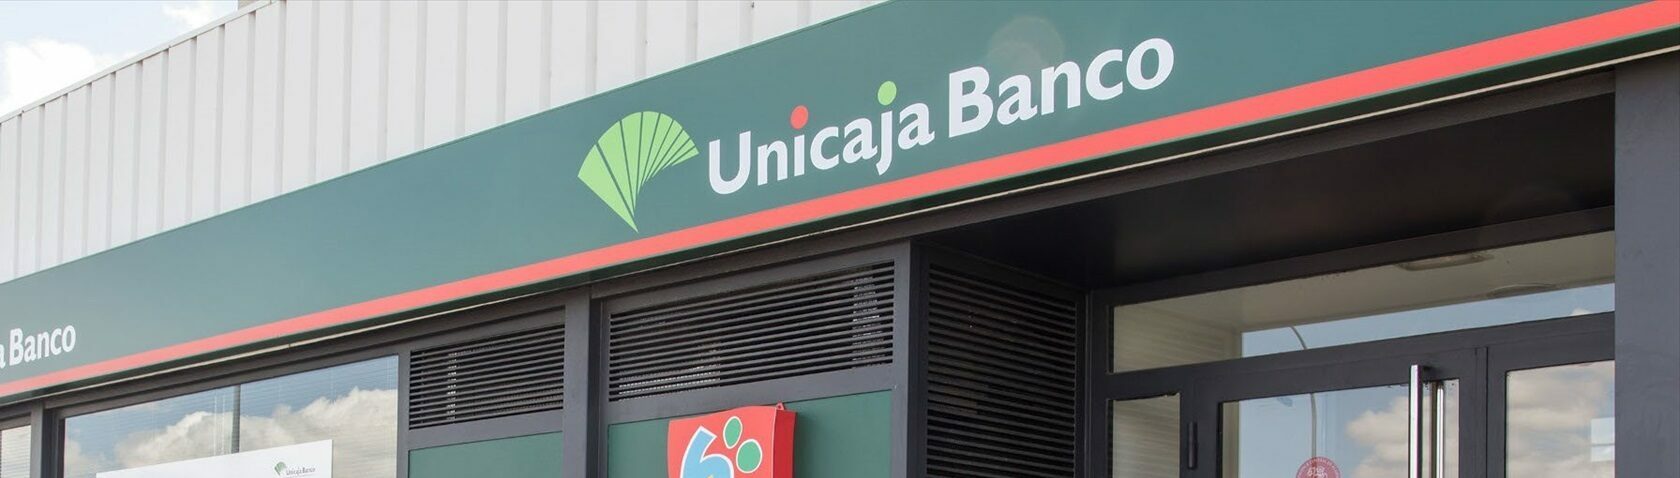 Unicaja Banco ganó 165 millones en el primer semestre, un 62% más